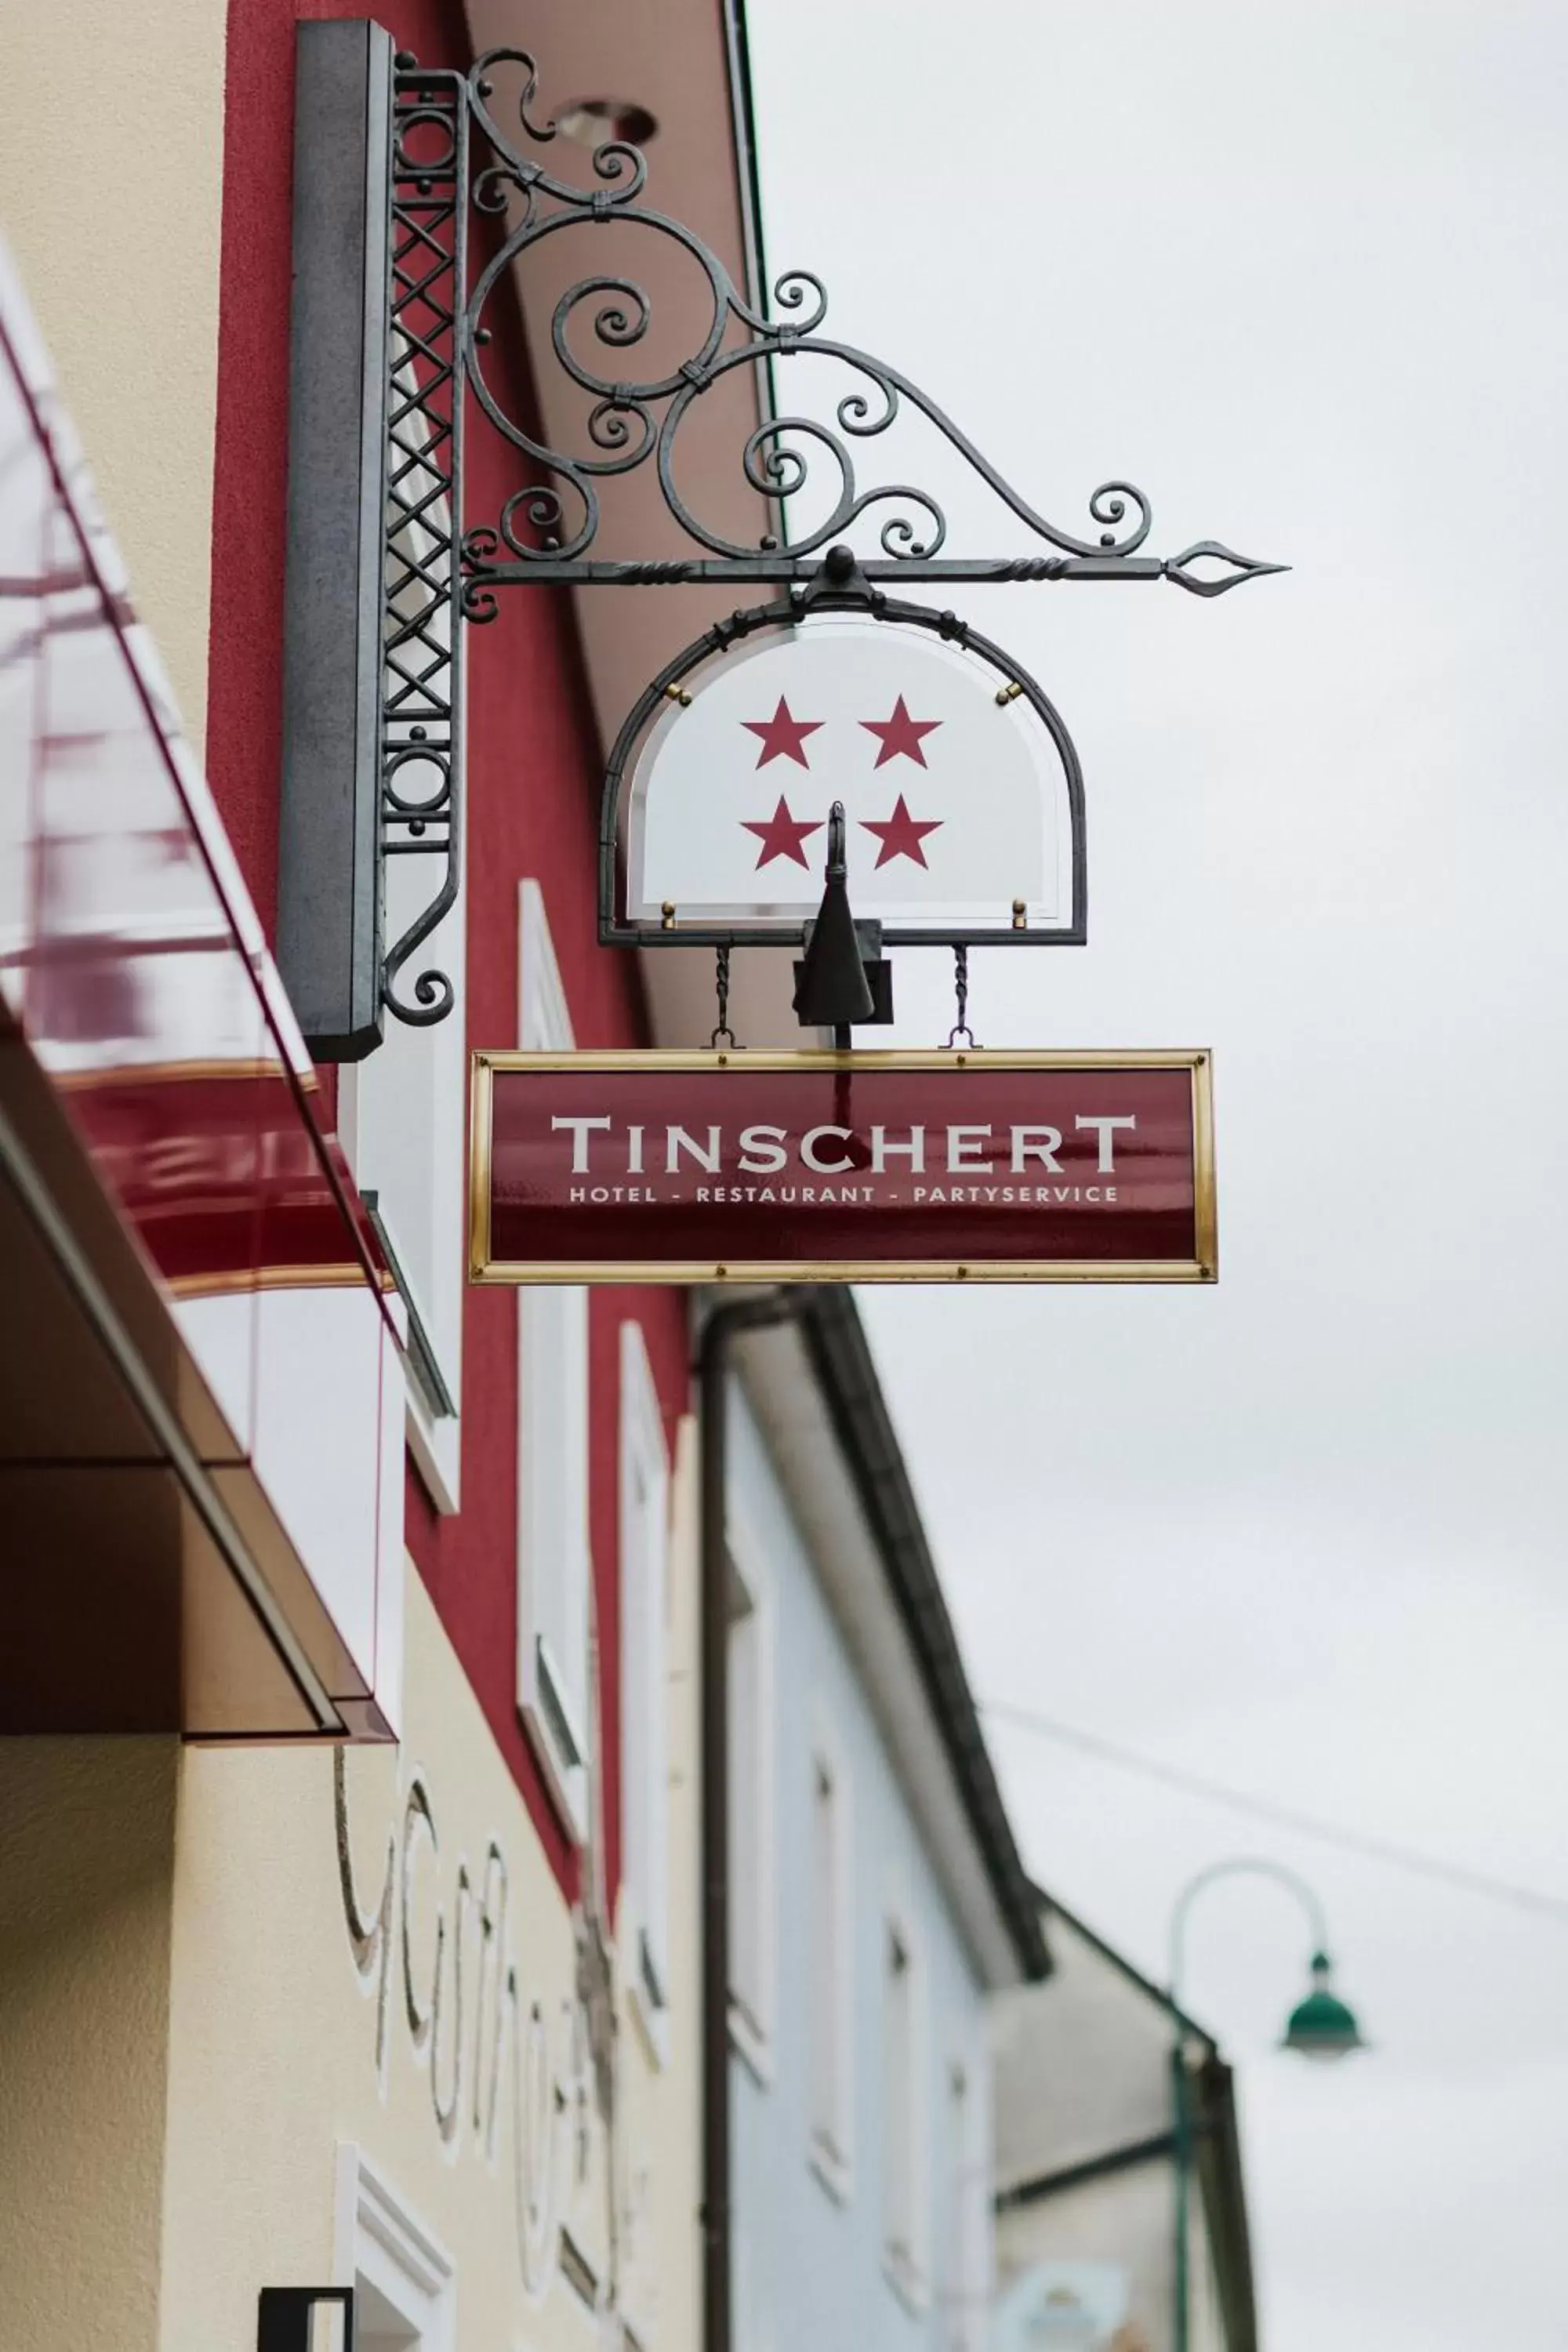 Property logo or sign in Tinschert Hotel-Restaurant-Partyservice